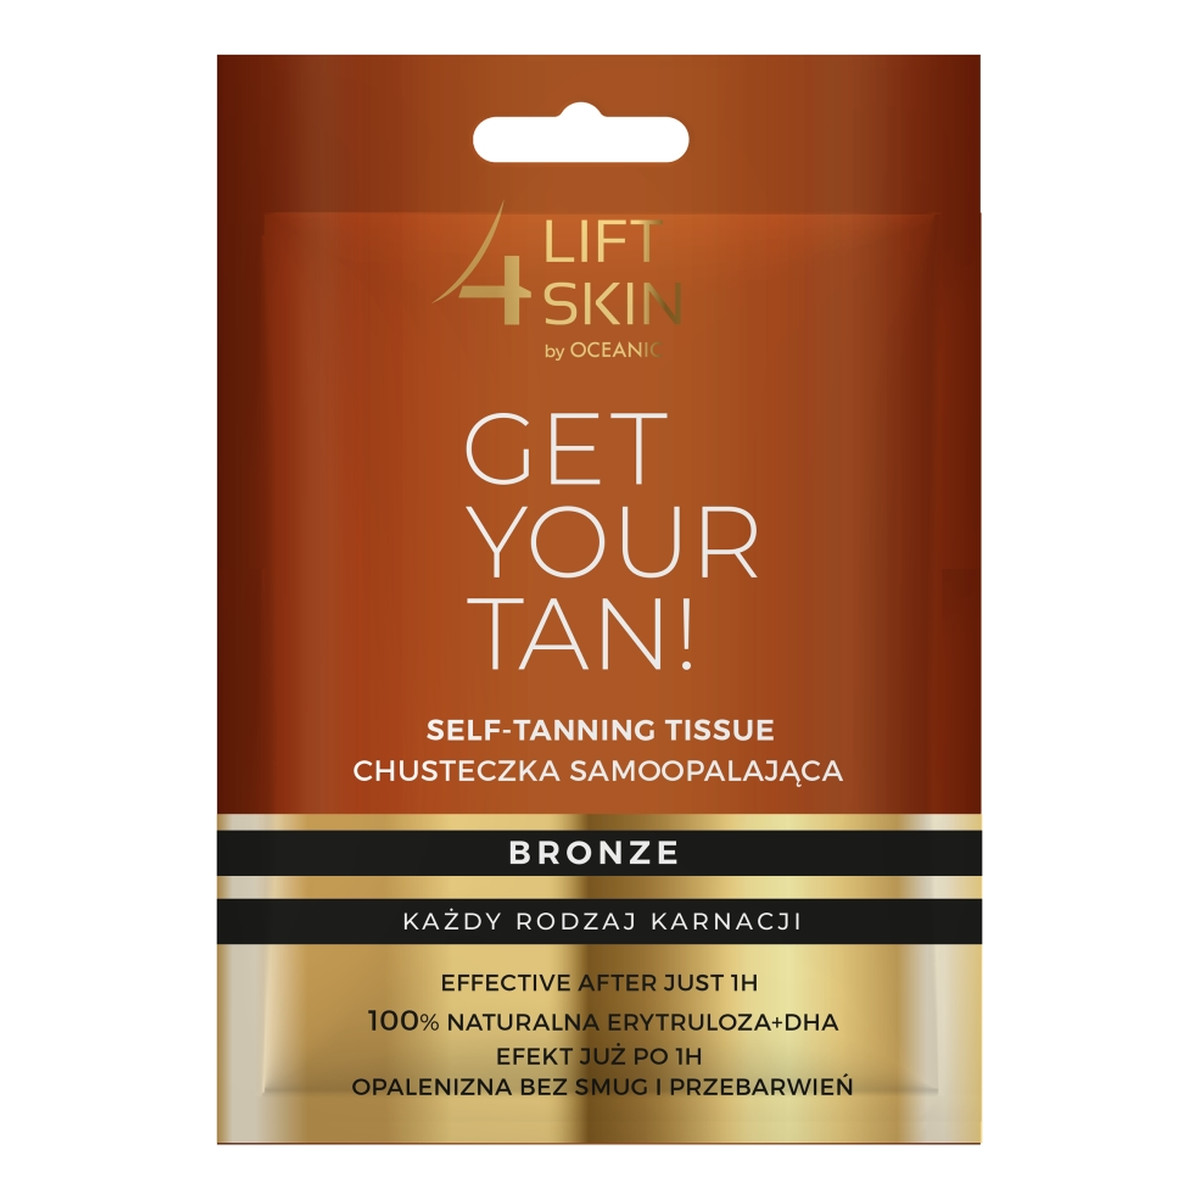 Lift 4 Skin Get Your Tan! Chusteczka samoopalająca 1szt